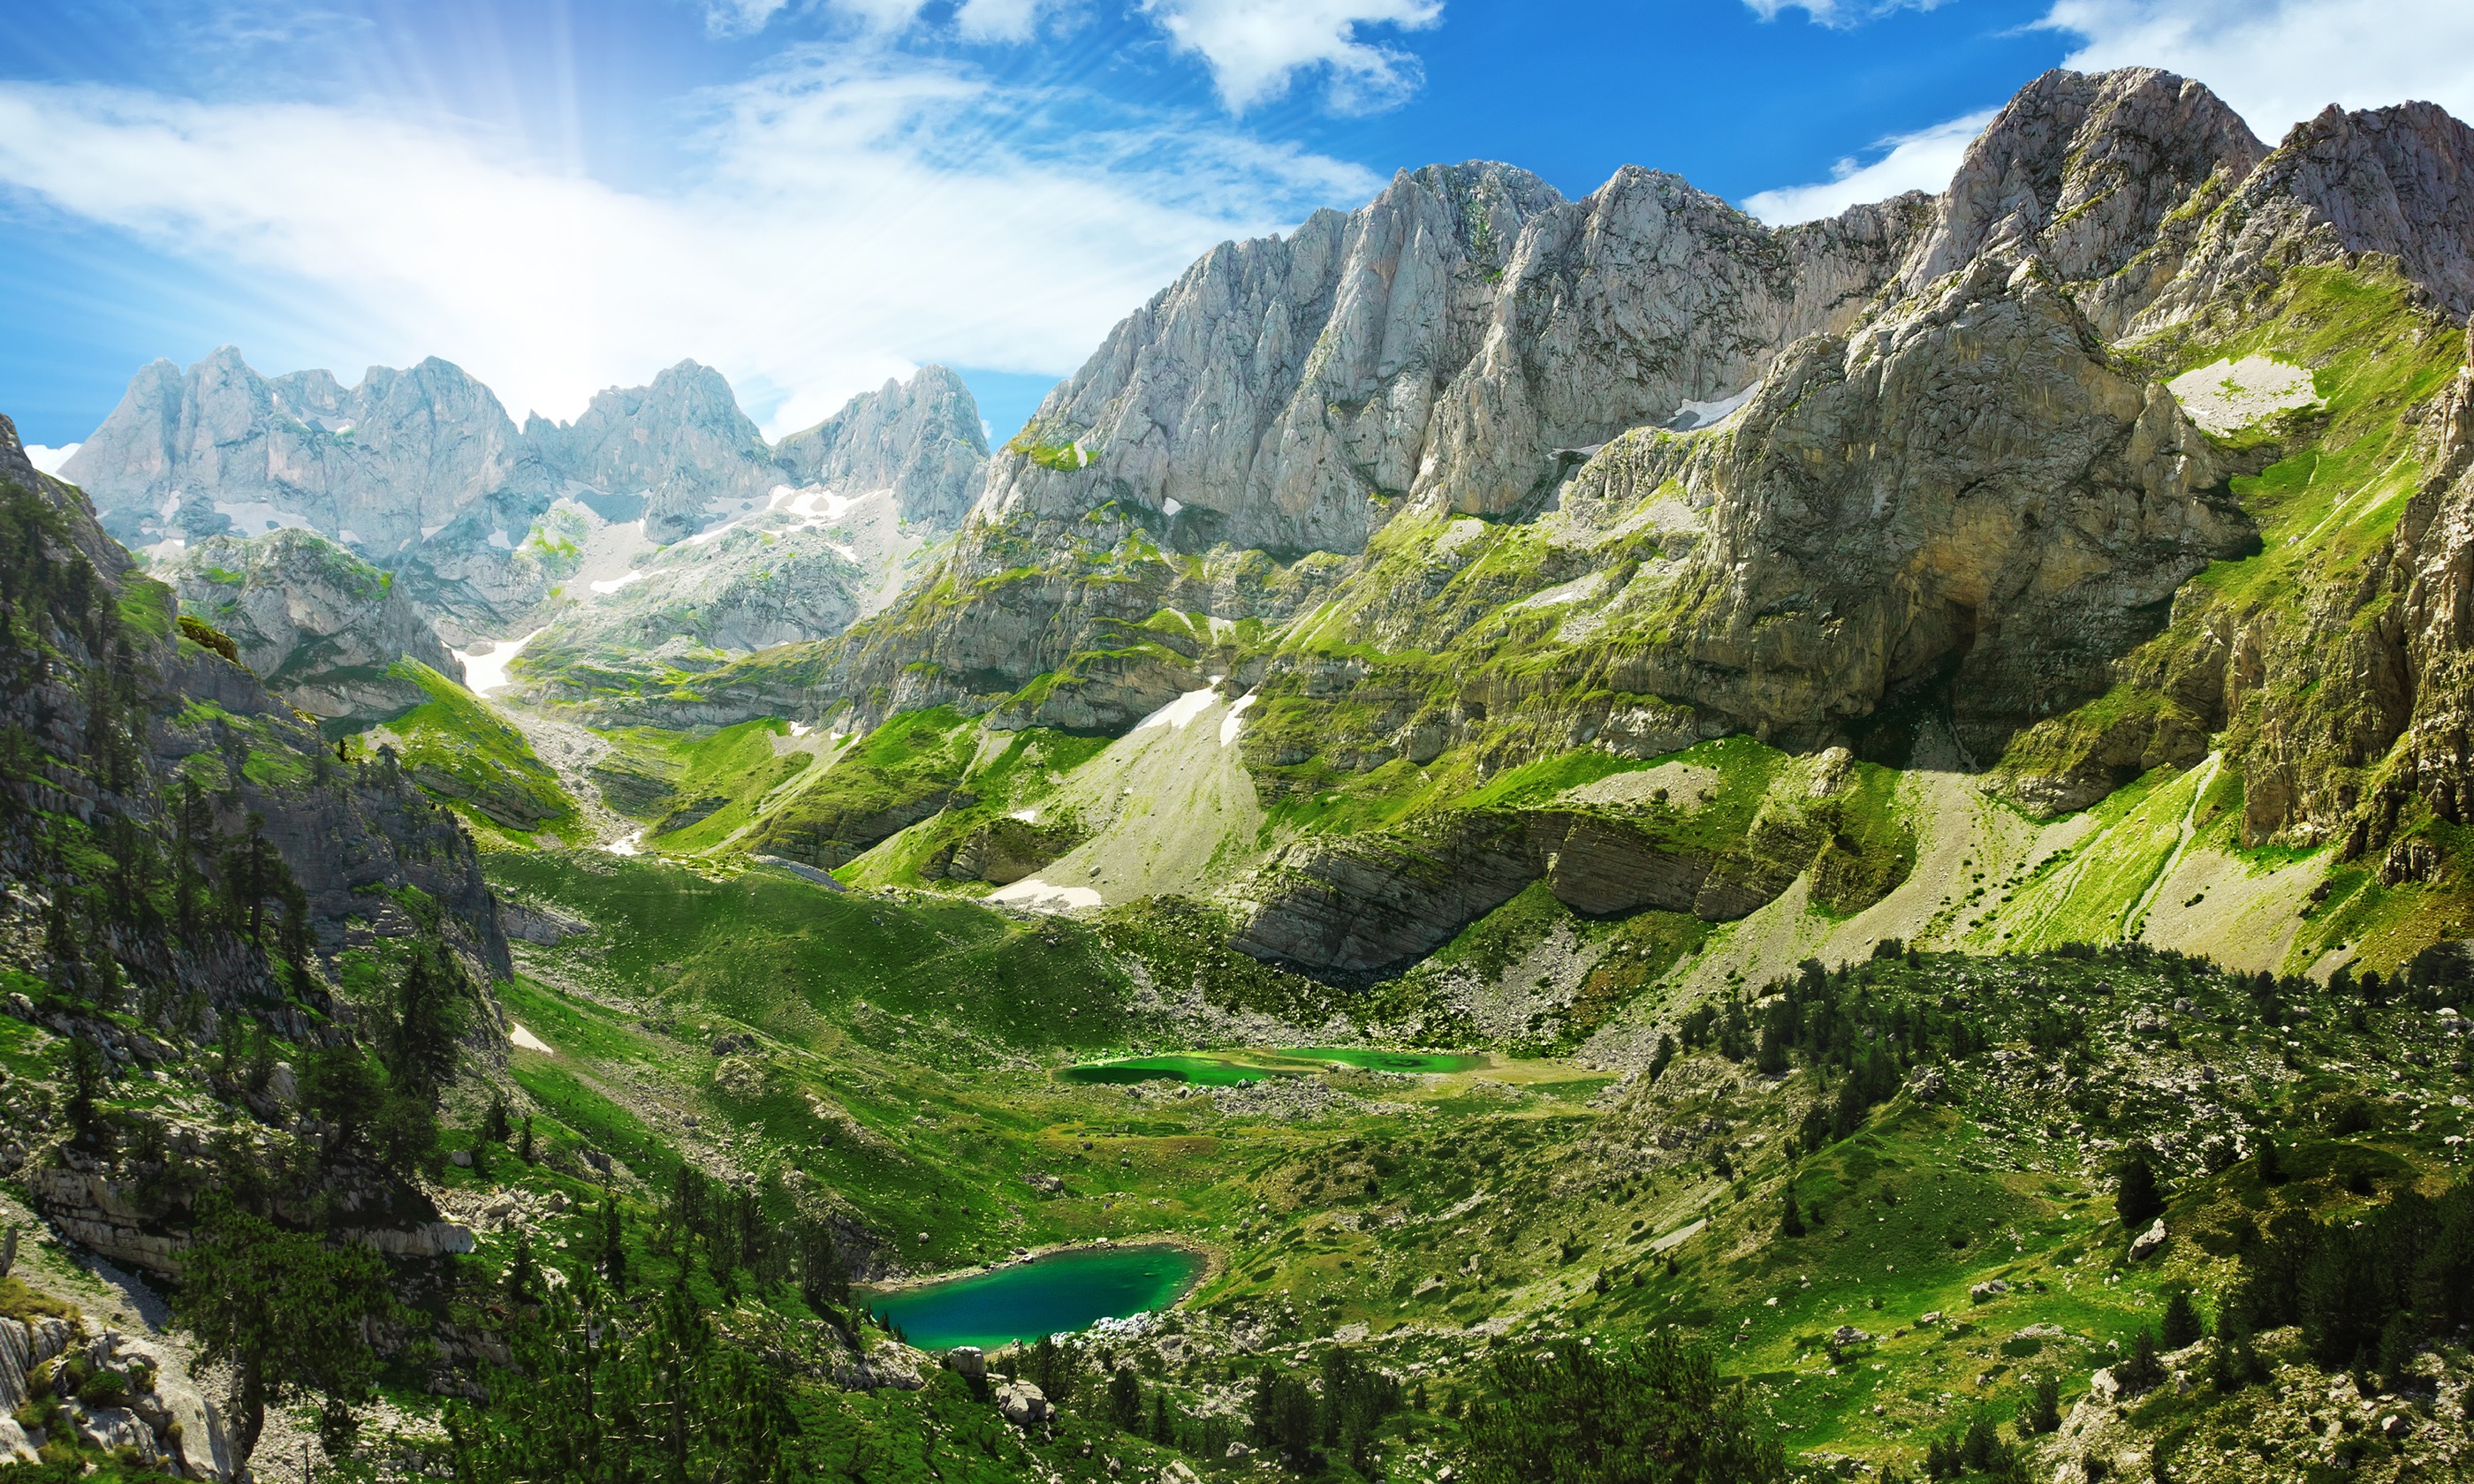 Albanian Alps (Shutterstock.com. See main credit below)